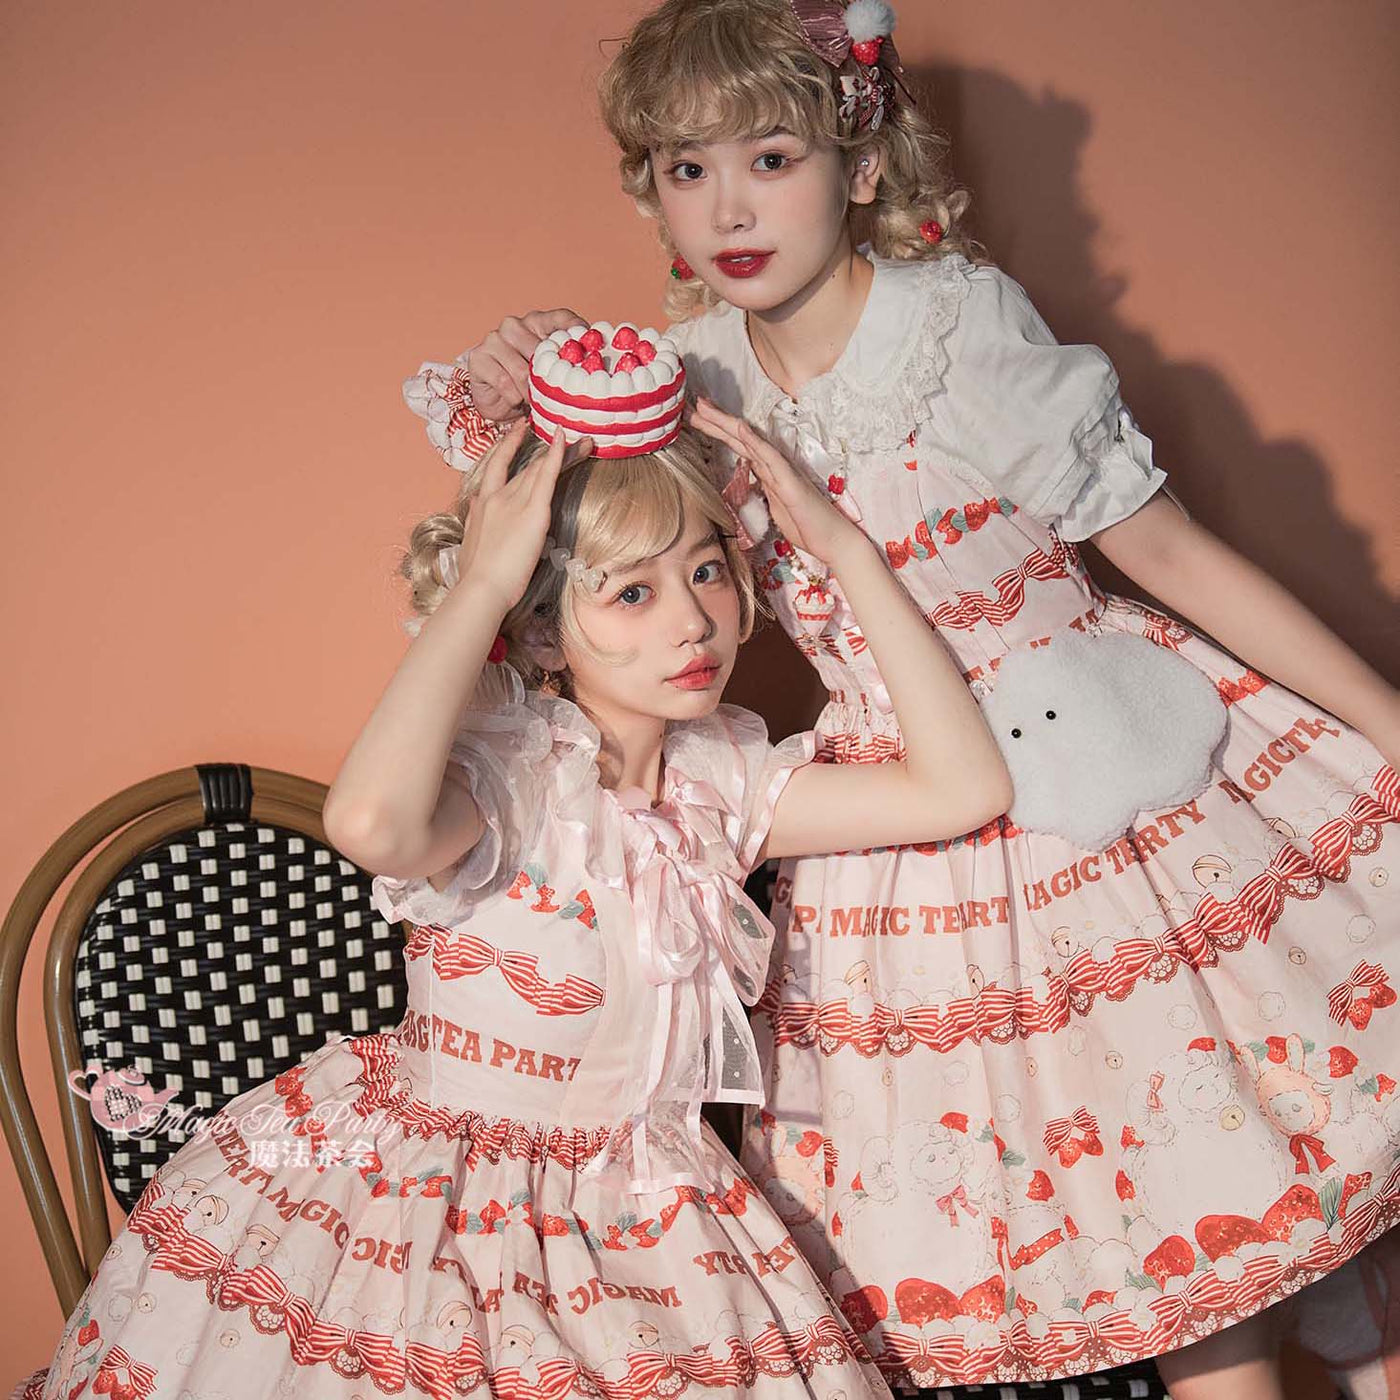 Magic Tea Party~Berry Sheep~ Strawberry Lolita JSK   